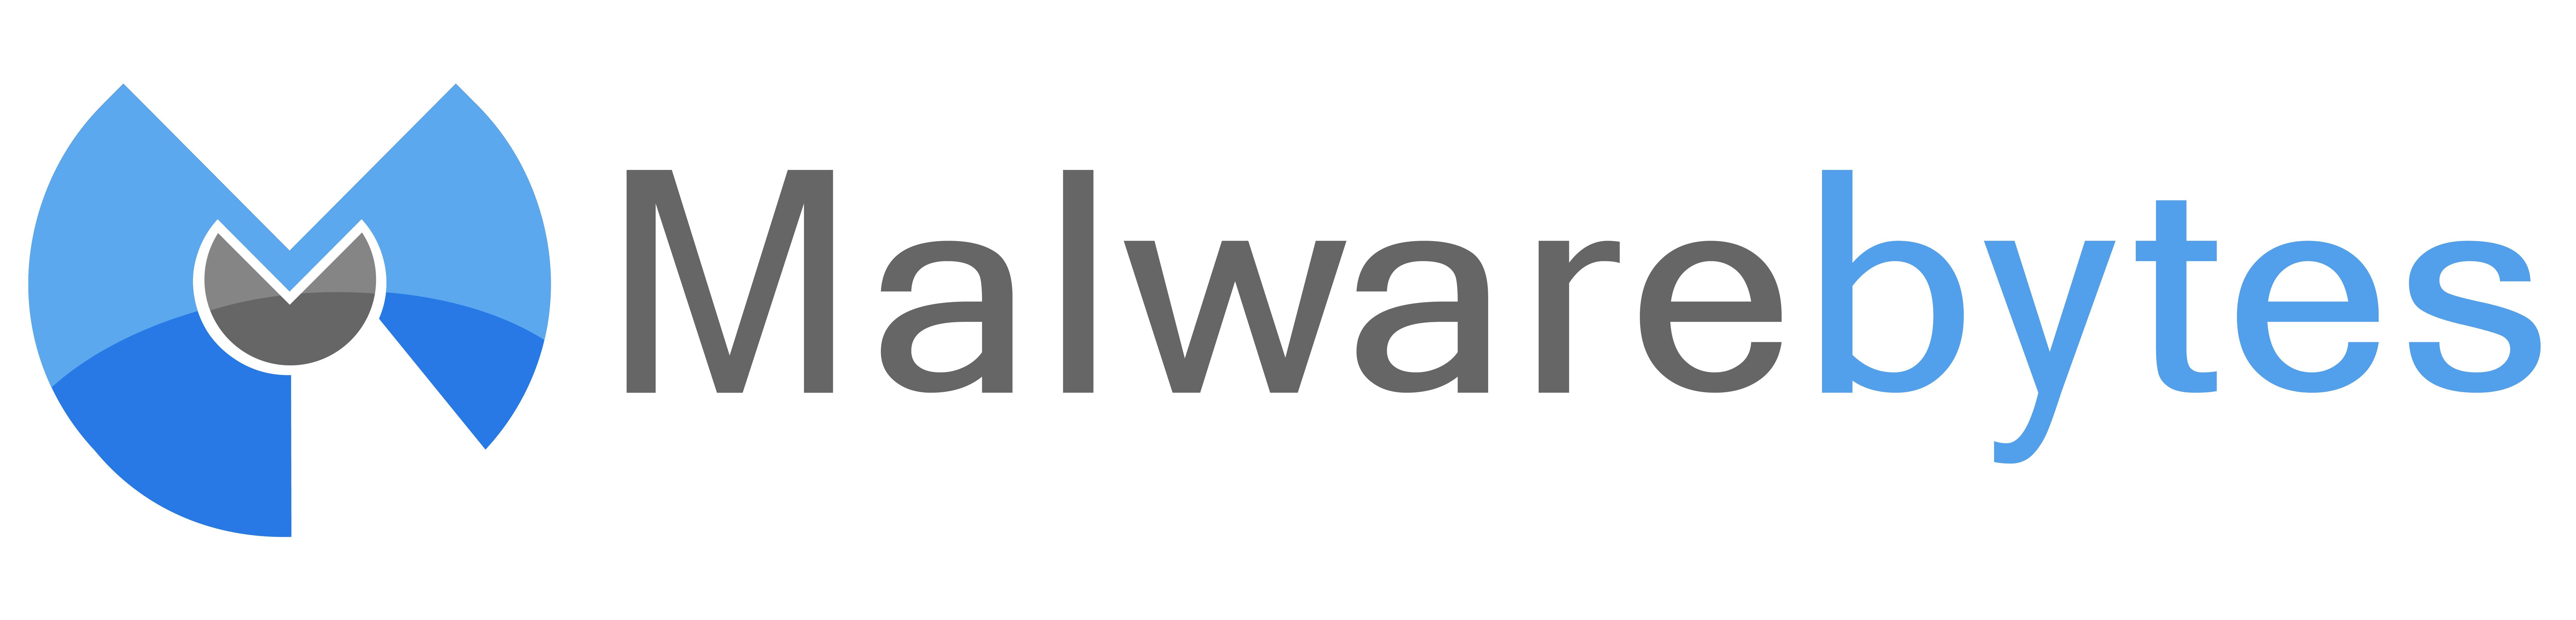 Malwarebytes Logo - Users pirating Malwarebytes receive free one year license - Myce.com